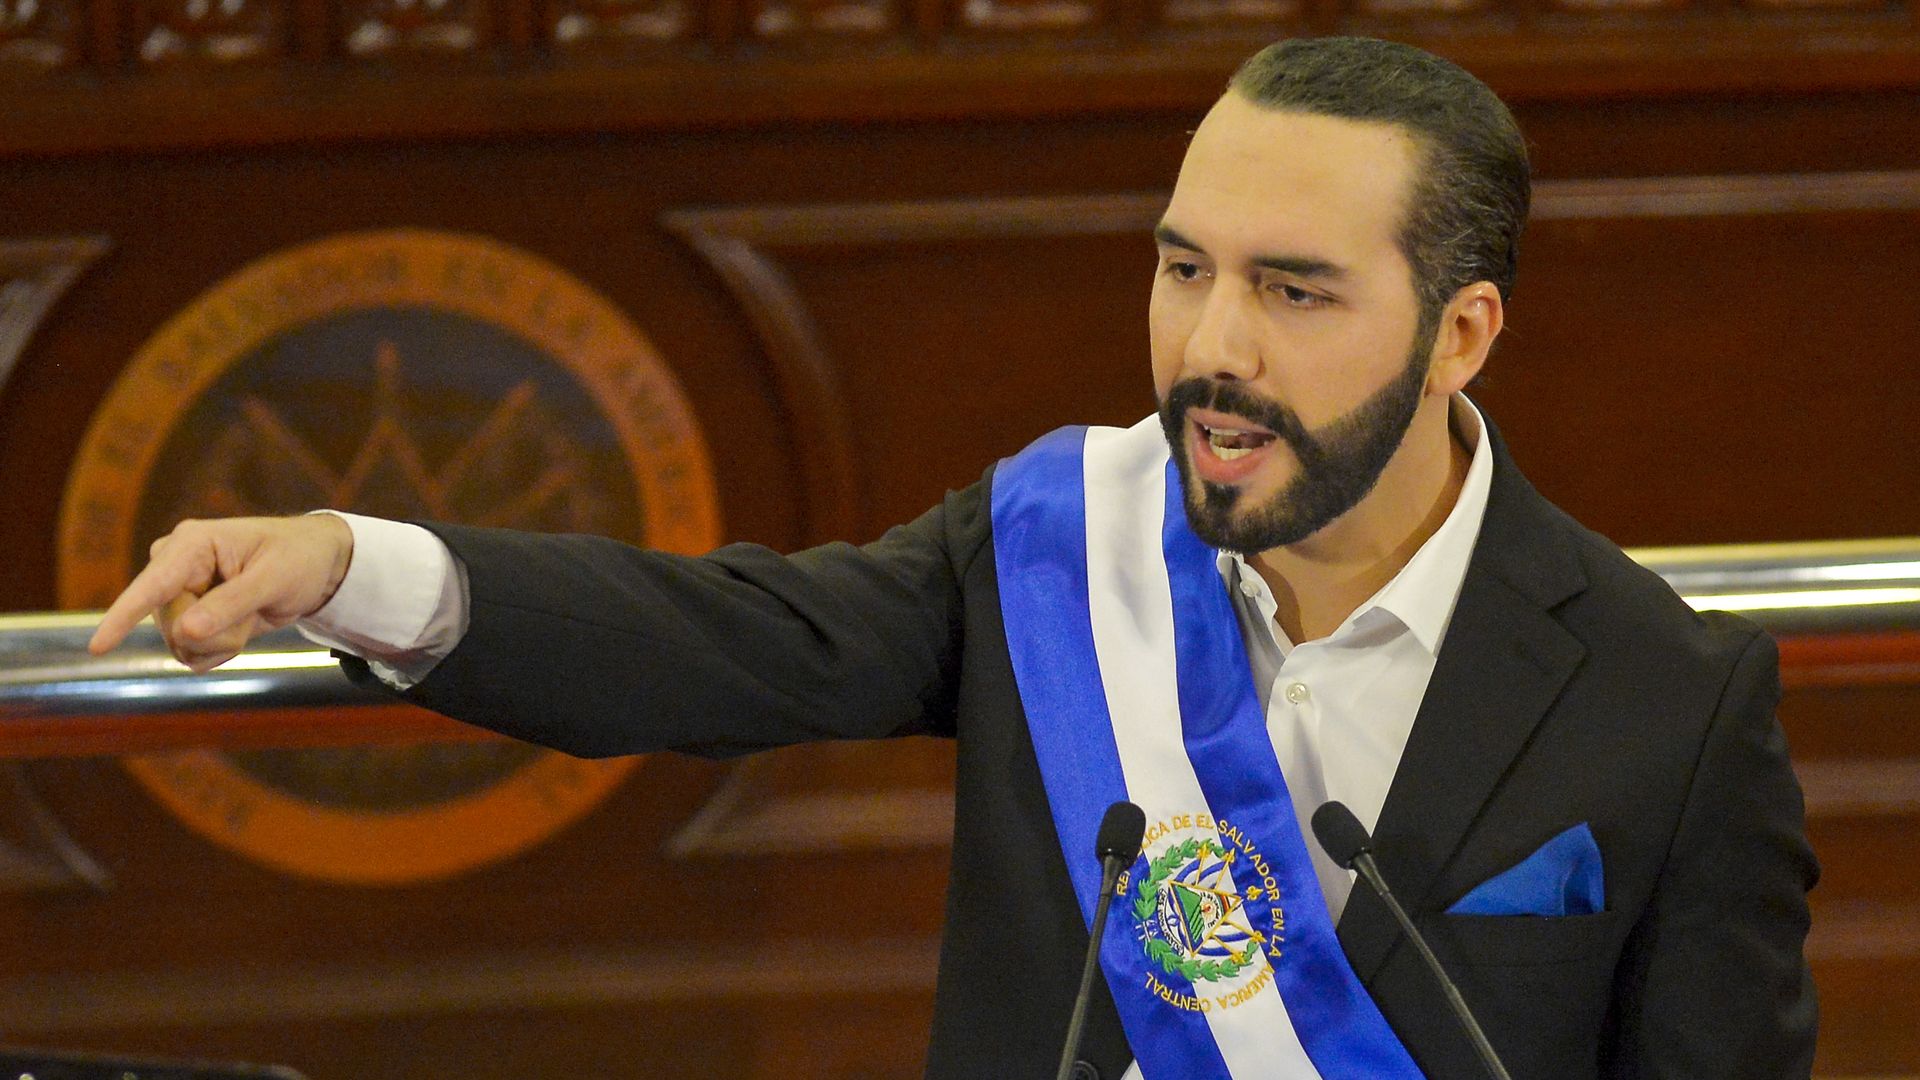  Nayib Bukele, El Salvador's president, delivers a speech to Congress at the Legislative Assembly building in San Salvador, El Salvador, on Tuesday, June 1